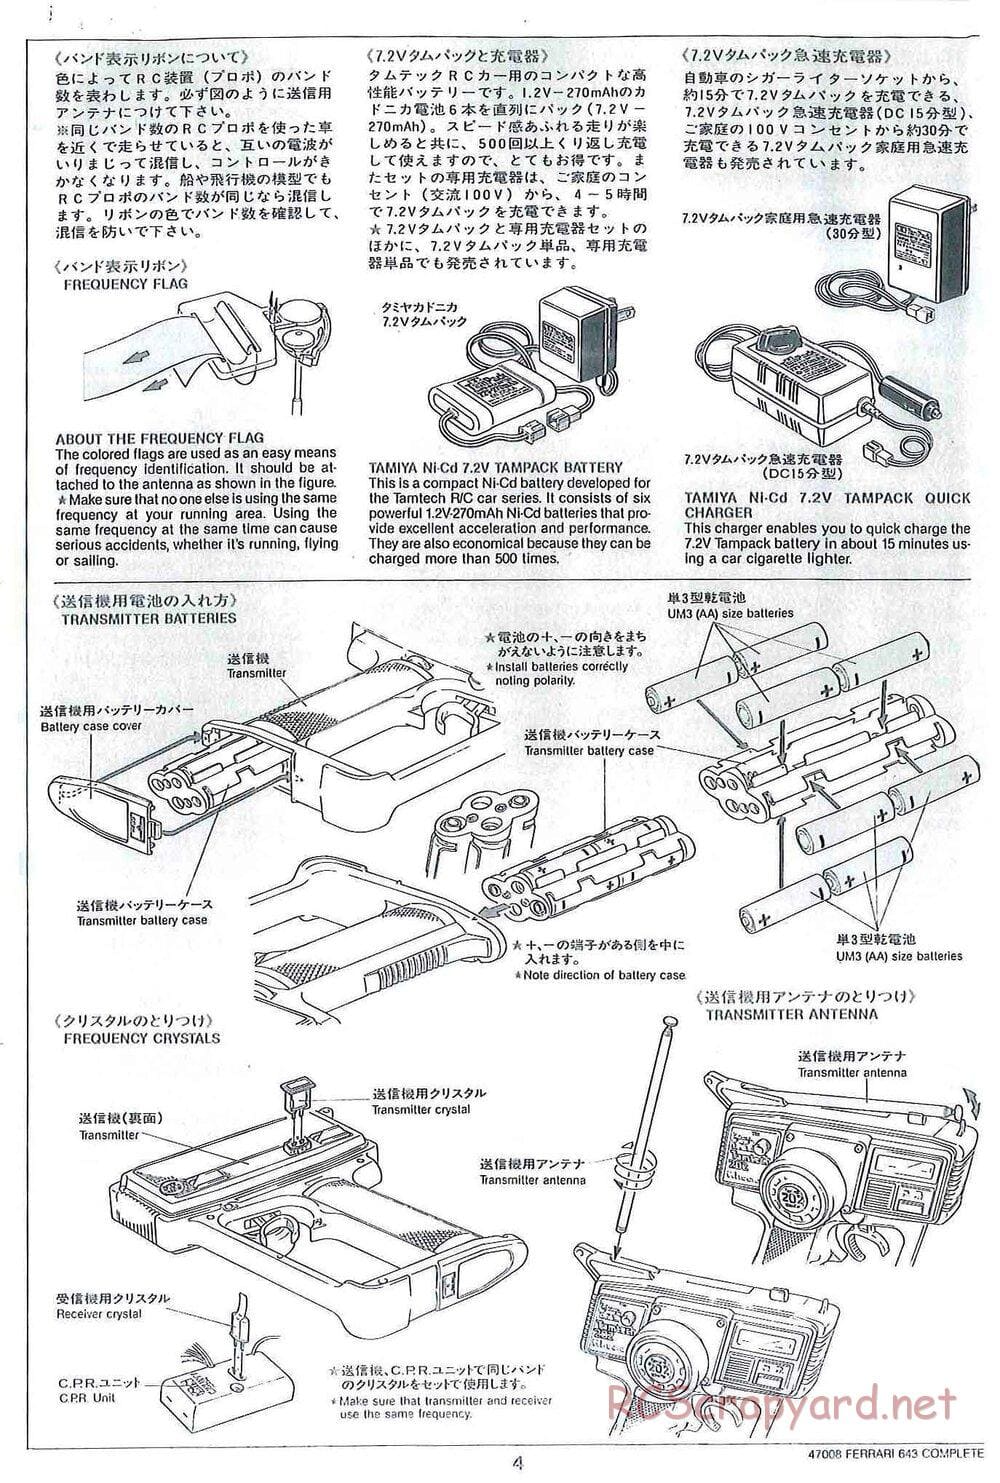 Tamiya - Tamtech - Ferrari 643 Chassis - Manual - Page 4